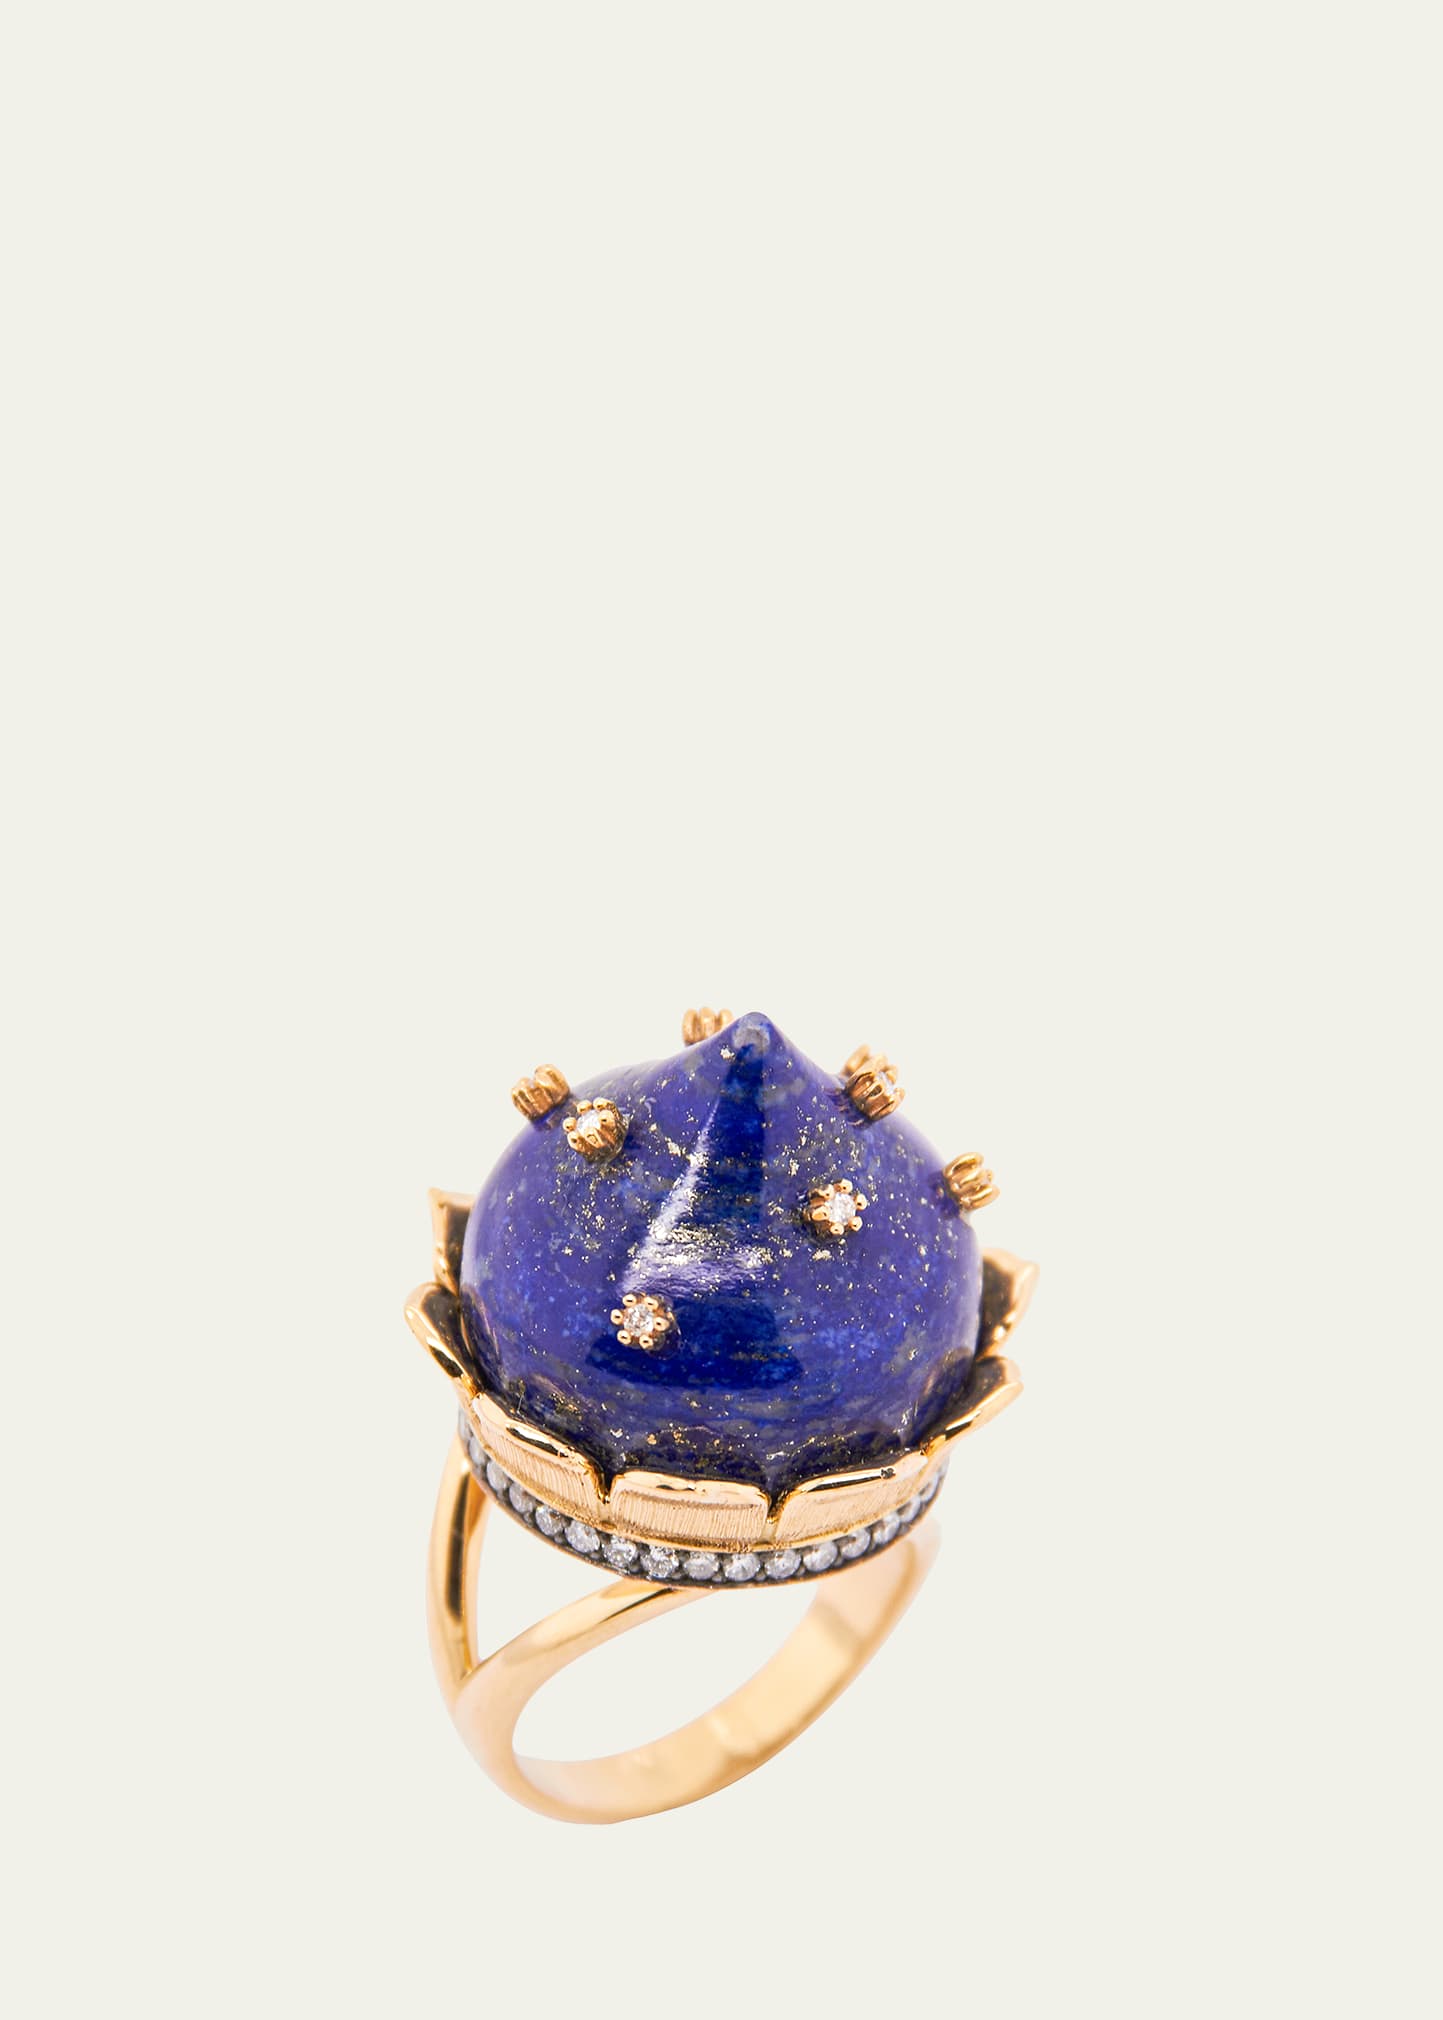 Silk Road Ring with Diamonds and Lapis Lazuli